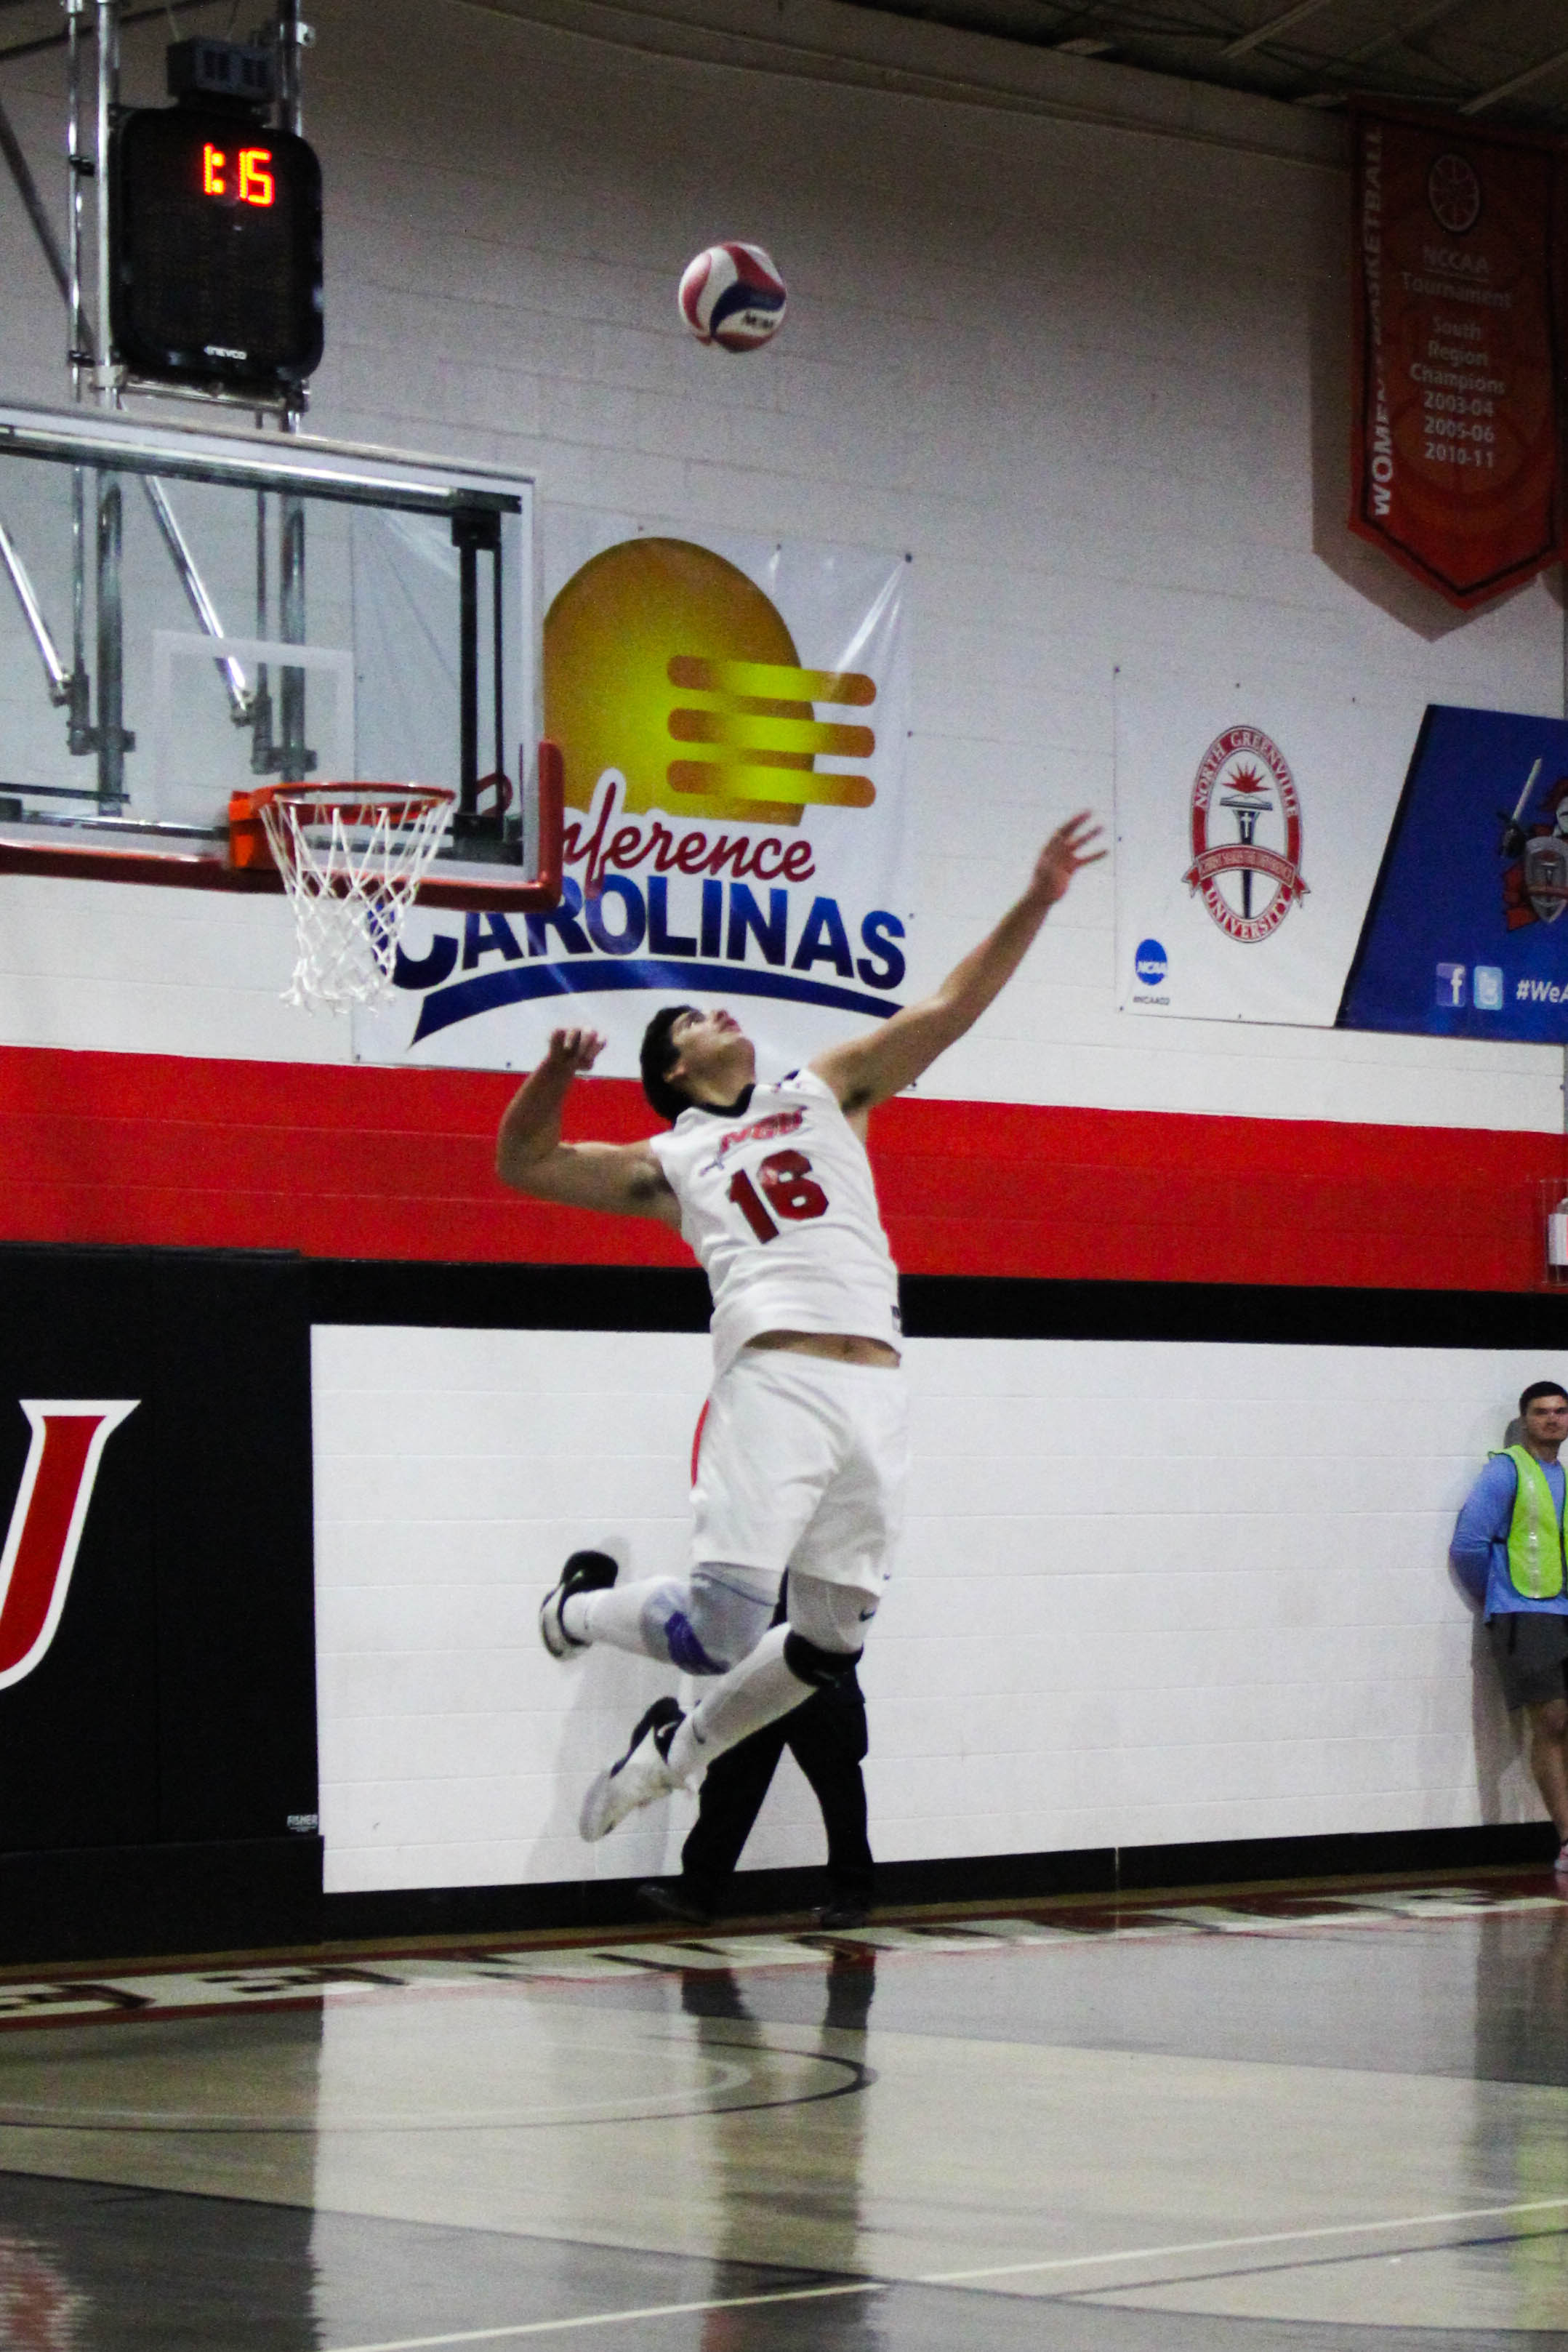 Freshman Sergio Carrillo (16) jumps to serve the ball.